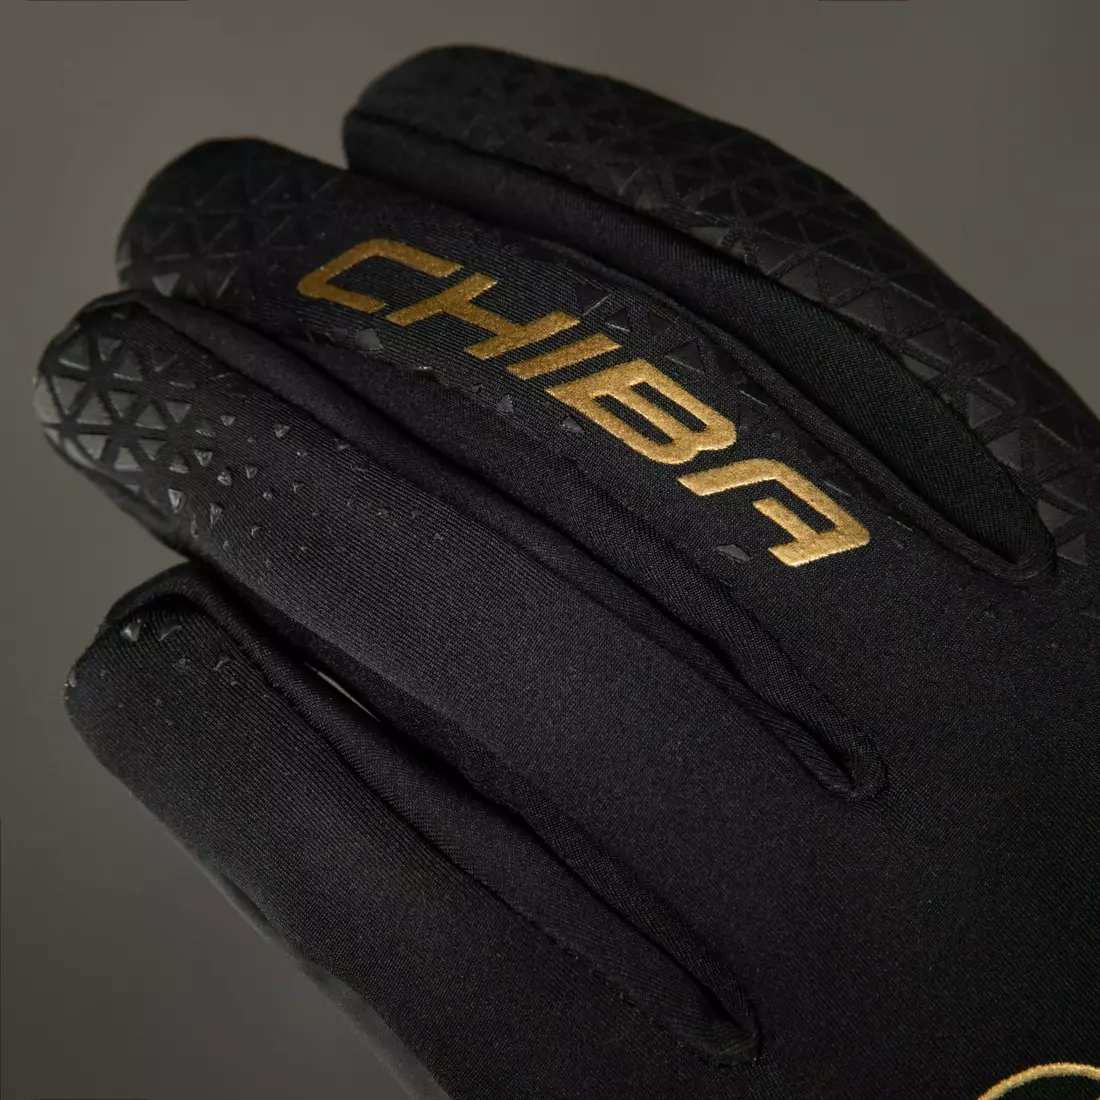 CHIBA Thin cycling gloves, BIOXCELL LIGHT WINTER black 3160120